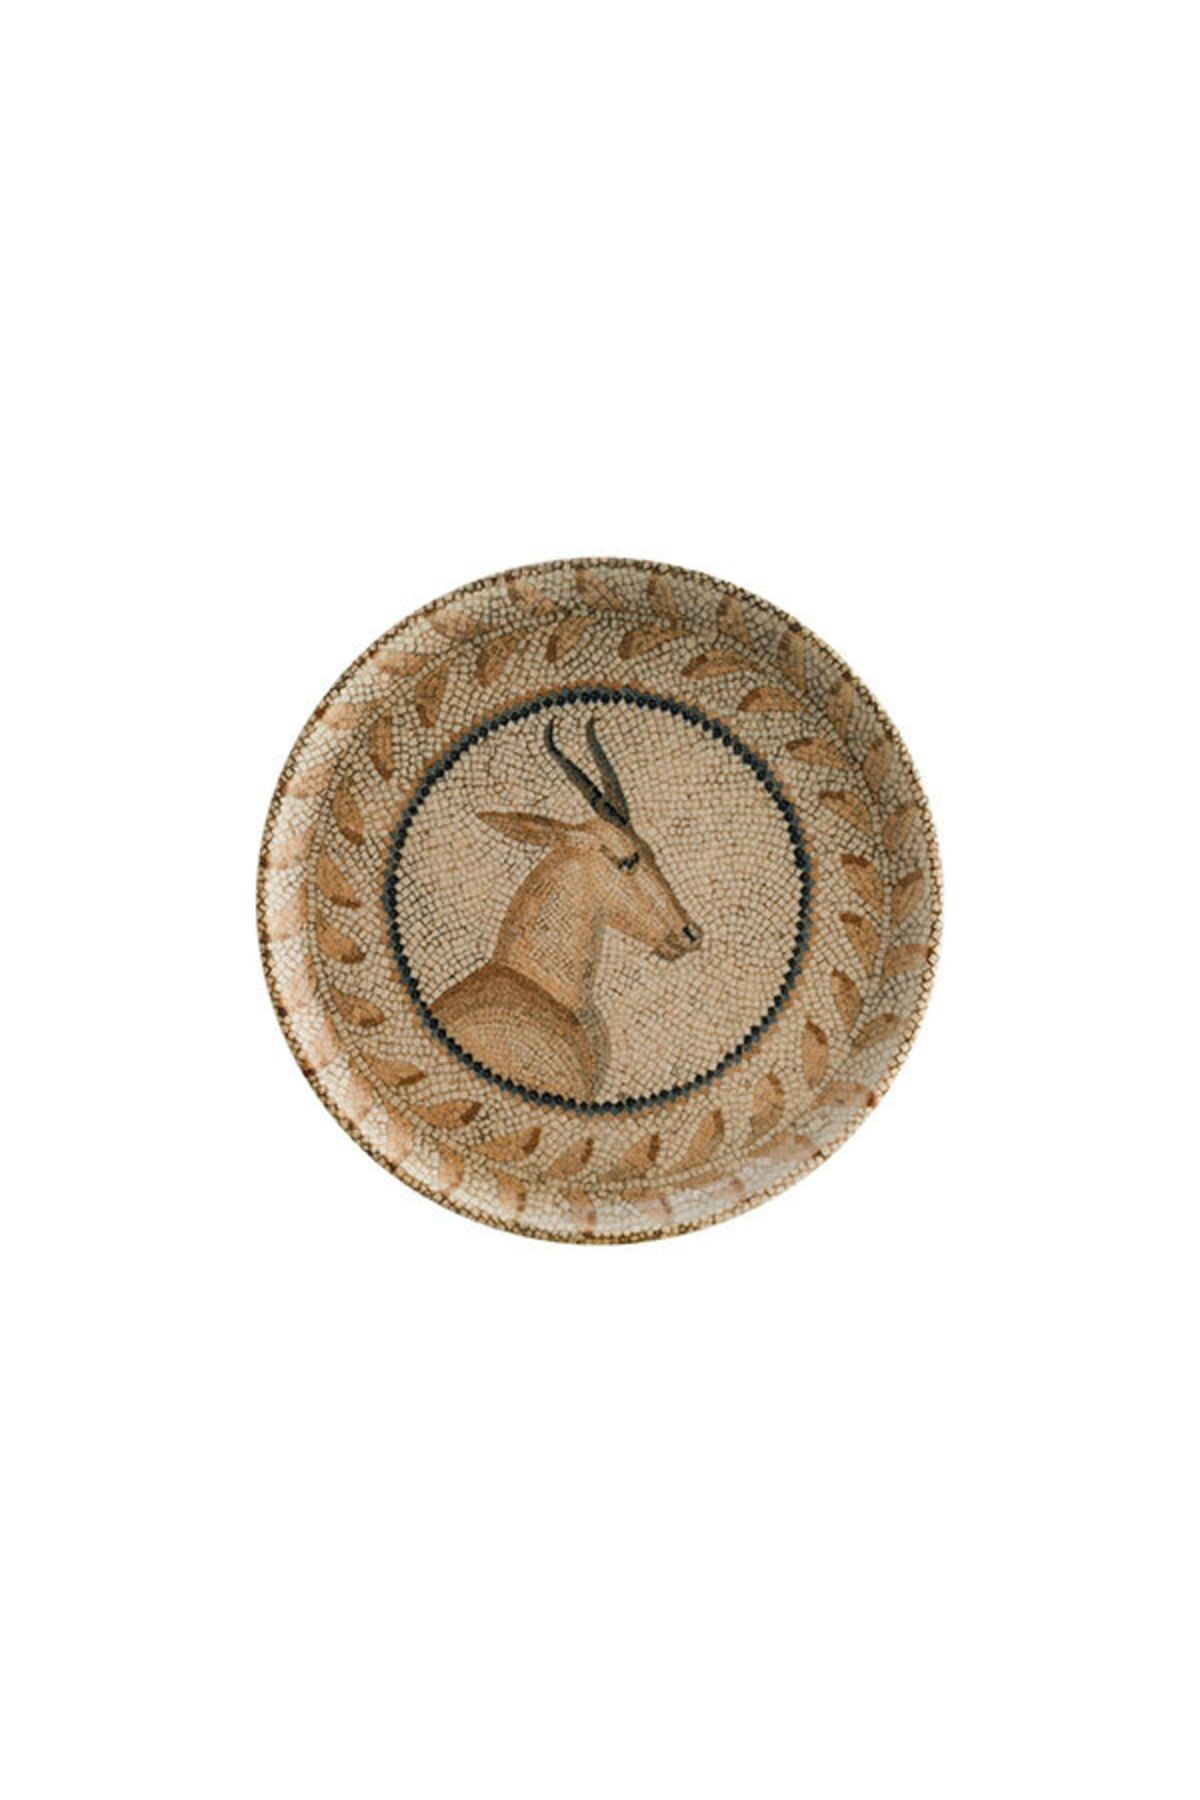 Bonna Porselen Mezopotamya Geyik 16 cm Hygge Düz Tabak (2'li)